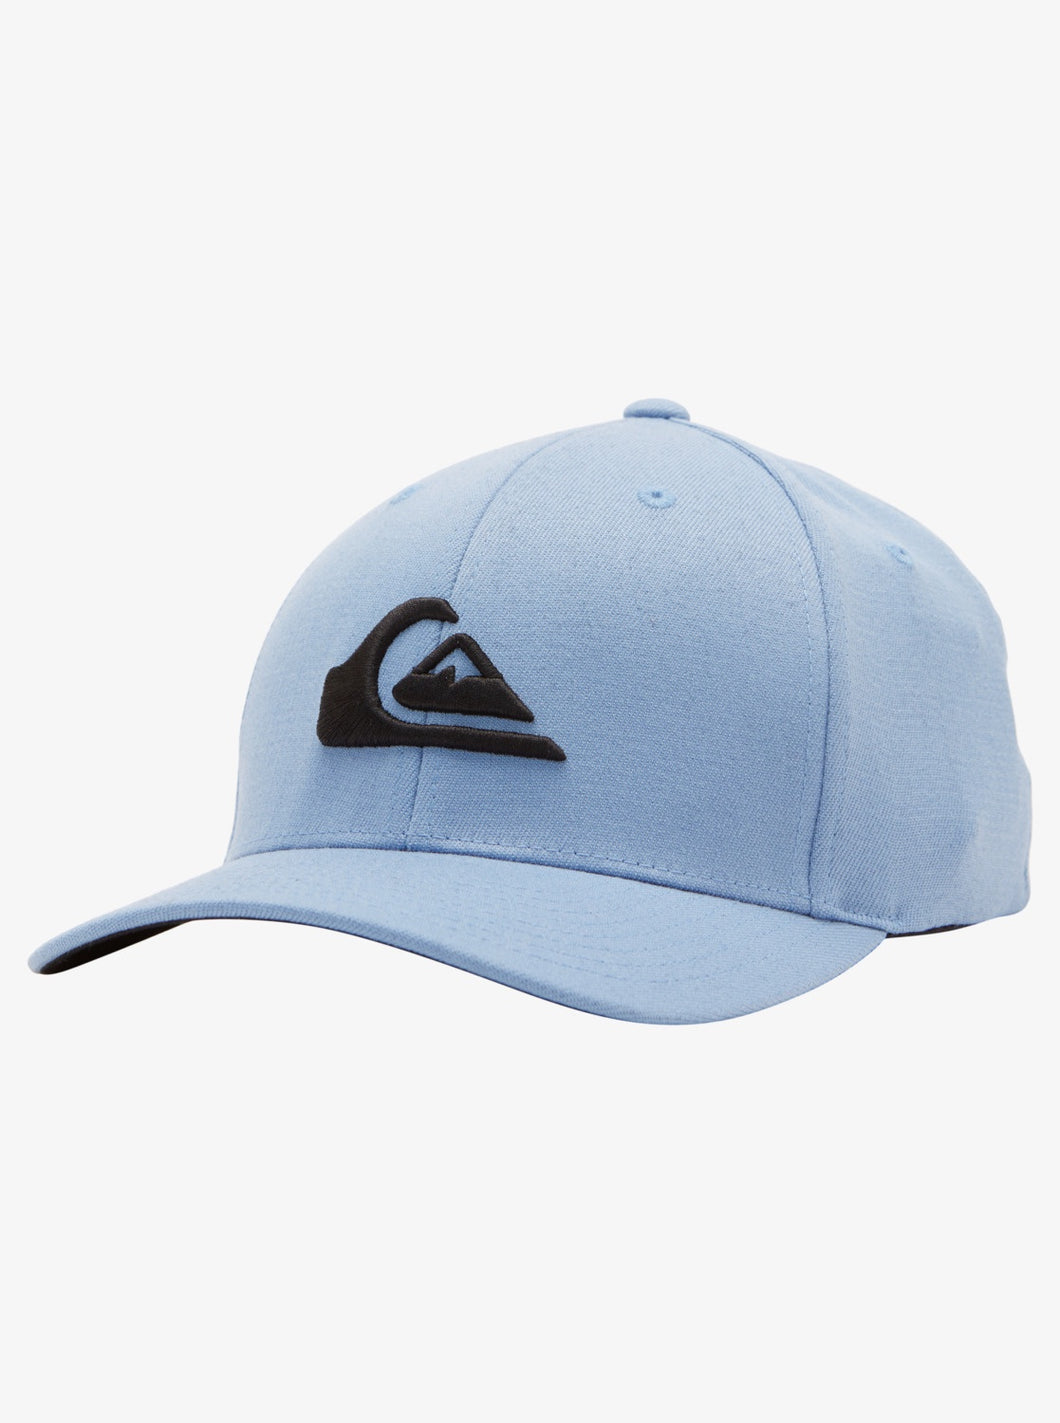 Quiksilver Mountain and Wave Flex Fit Cap - Blue Shadow